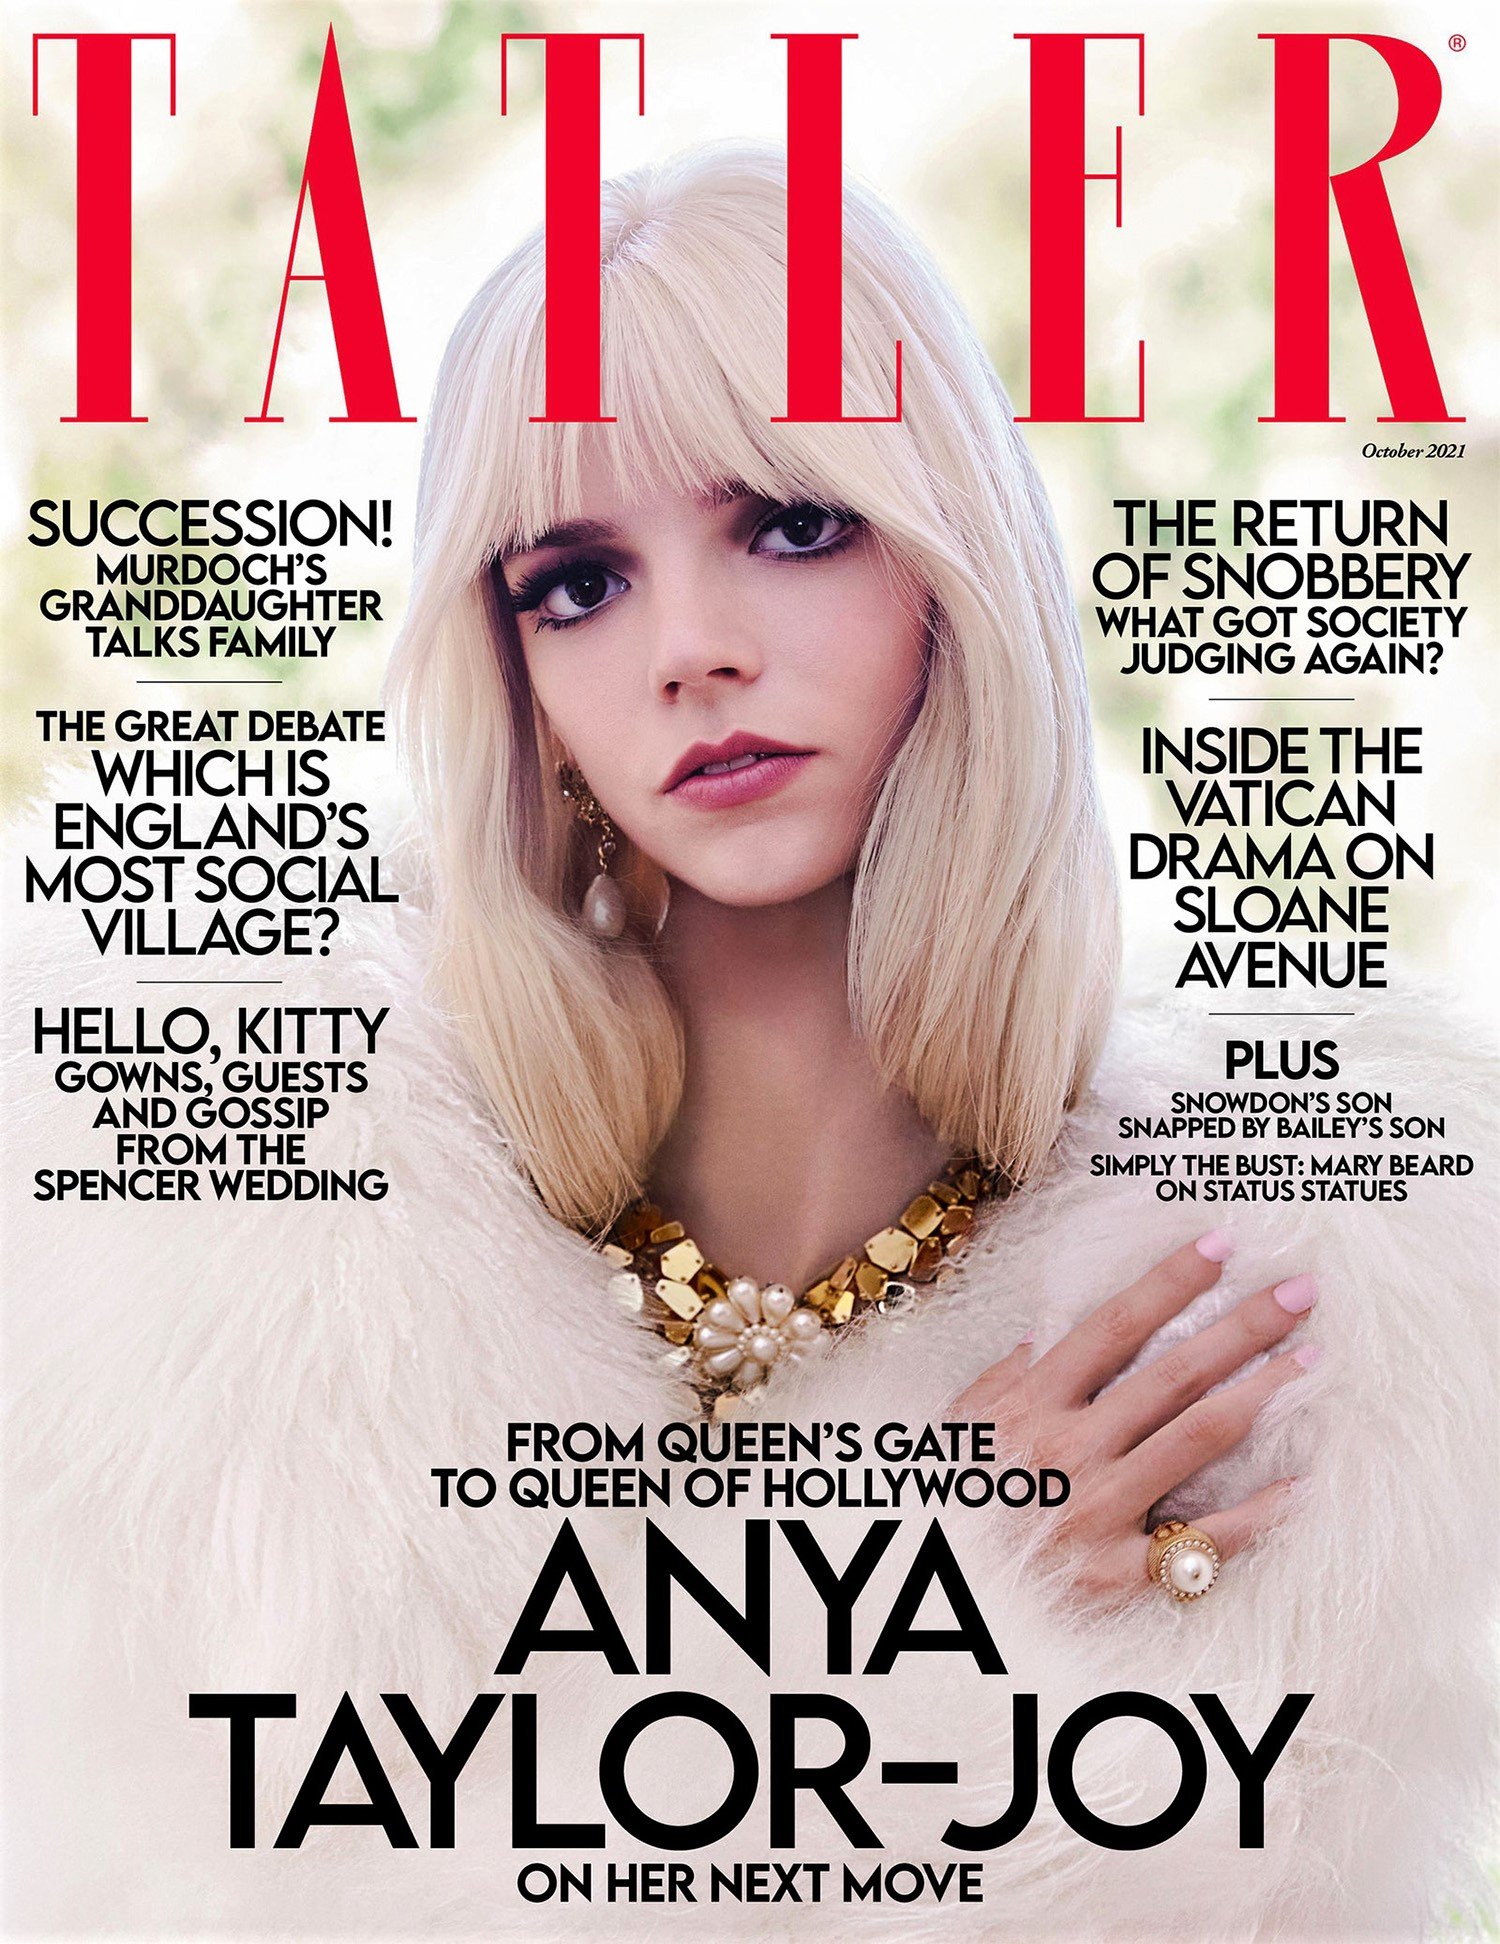 Anya-Taylor-Joy-covers-Tatler-UK-October-2021-by-Jack-Waterlot-1.jpg